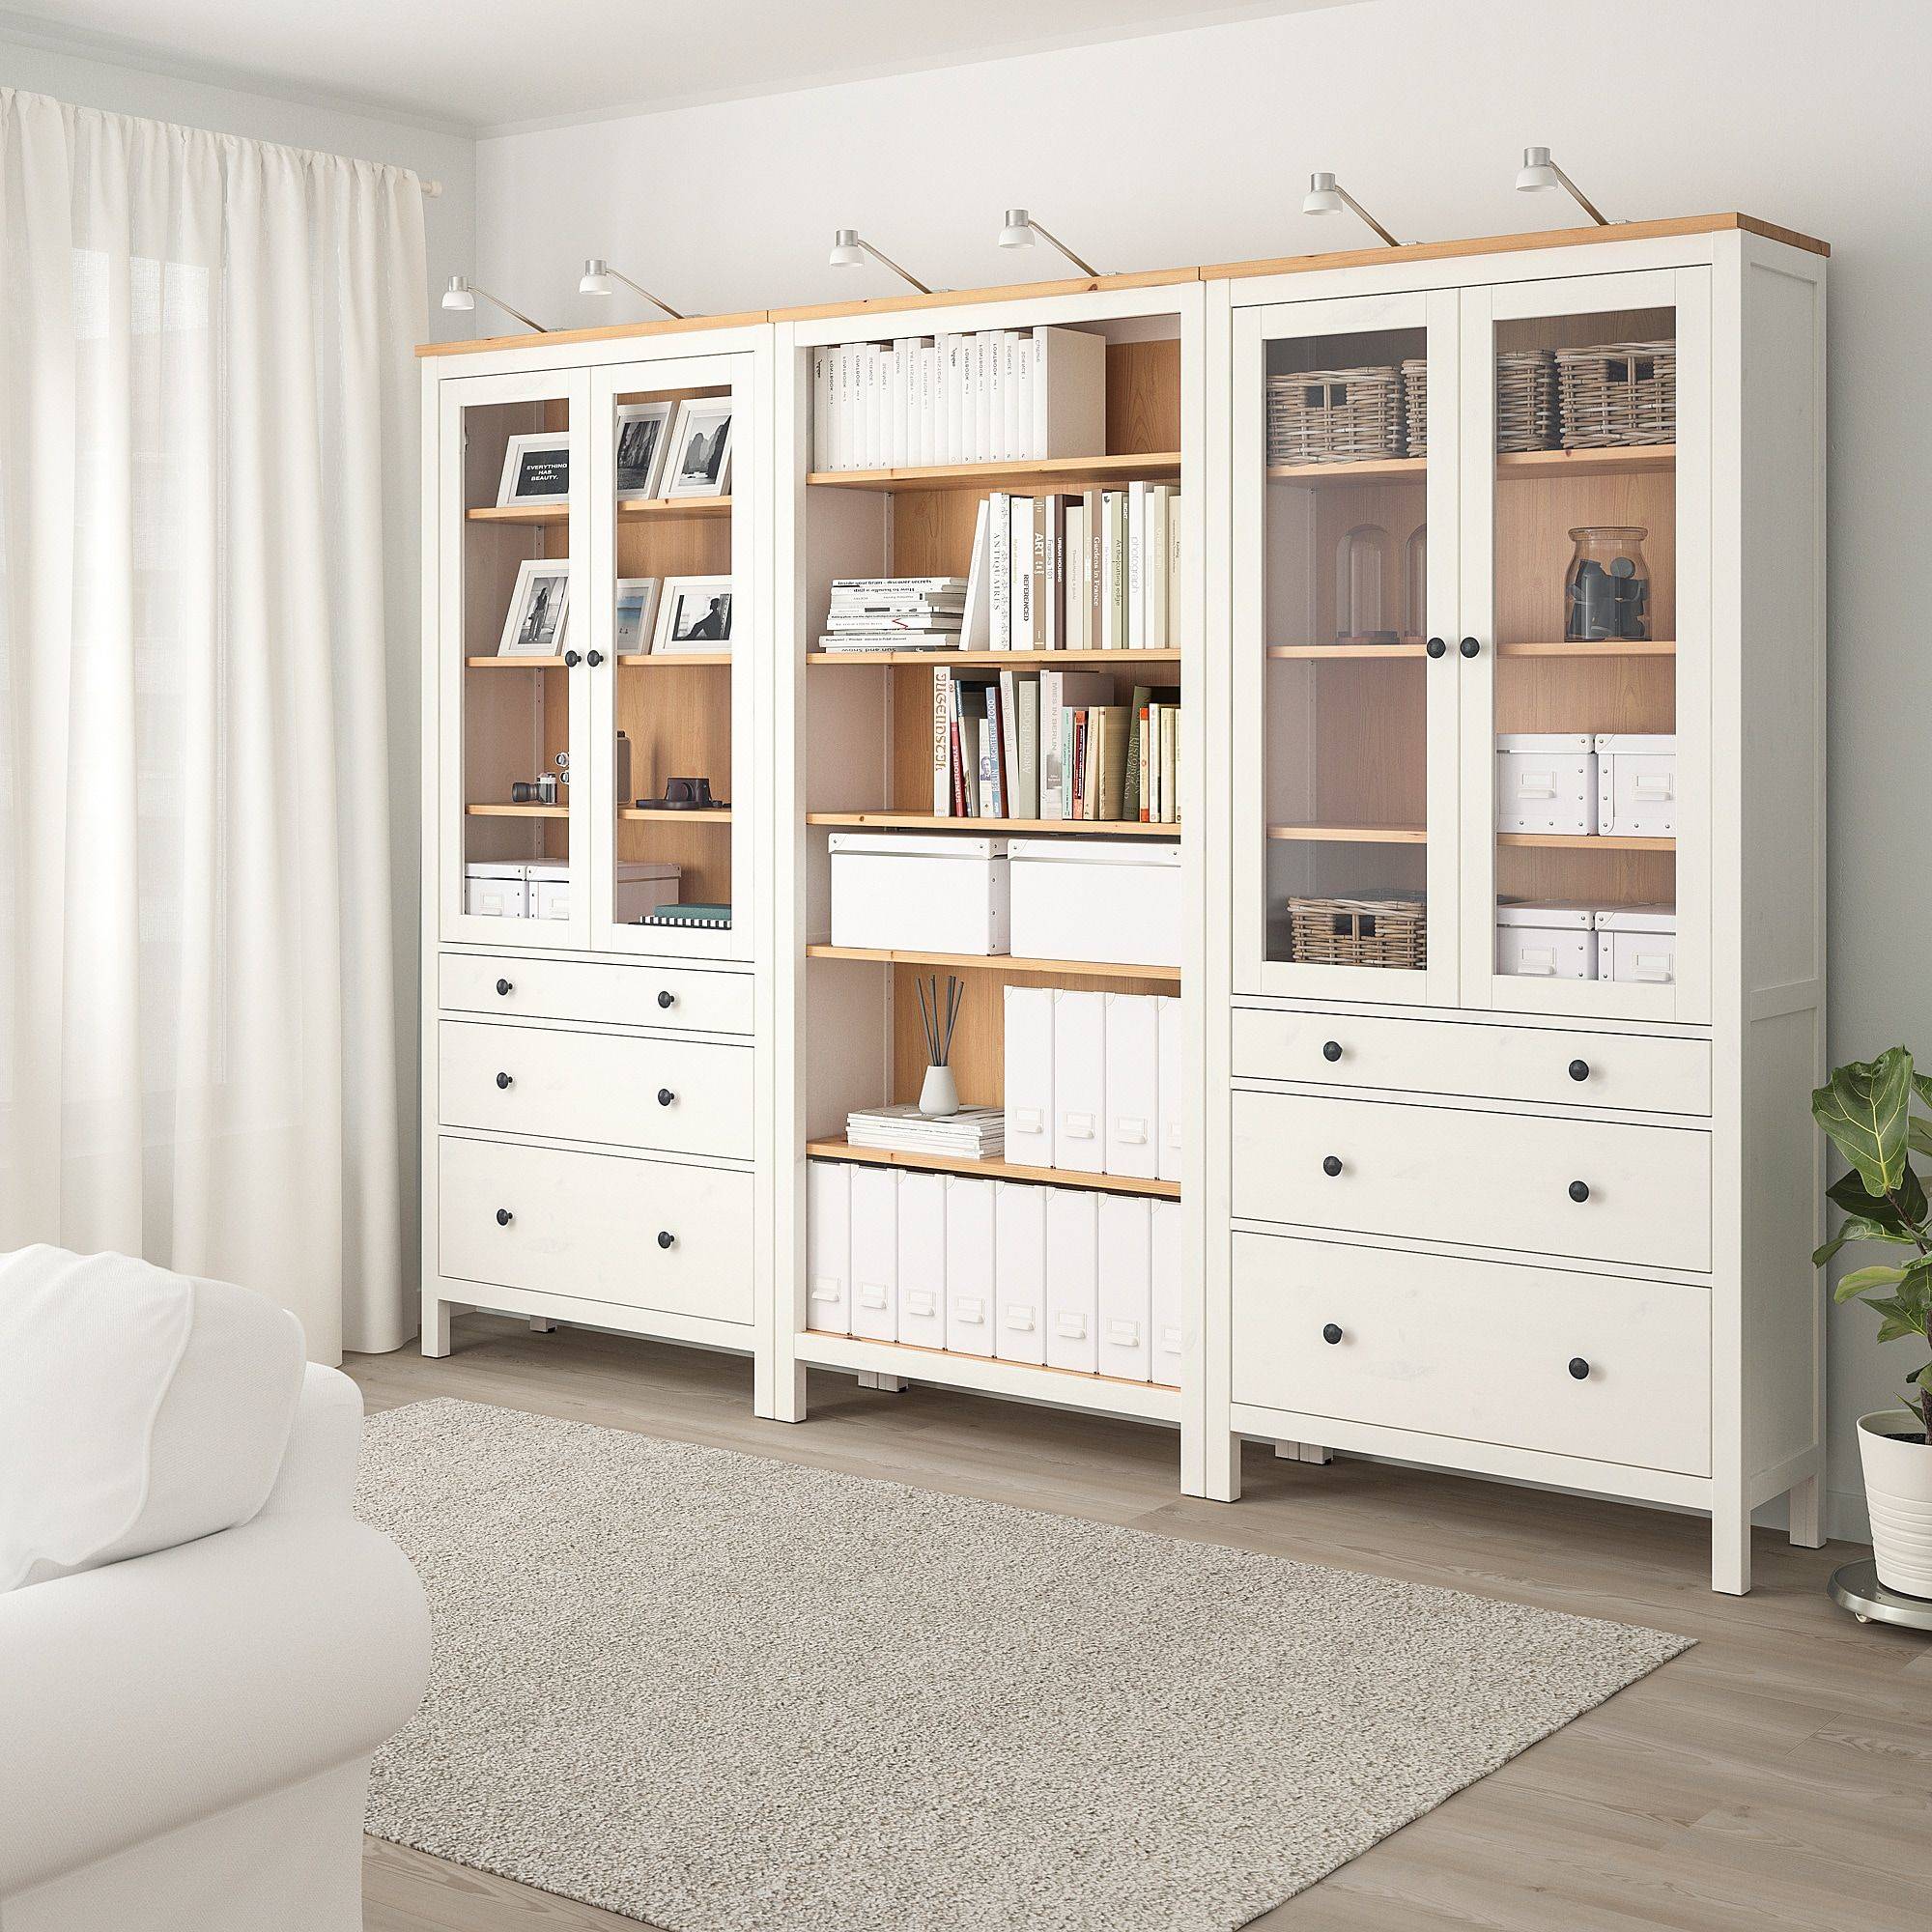 Mueble de salón blanco HEMNES de IKEA